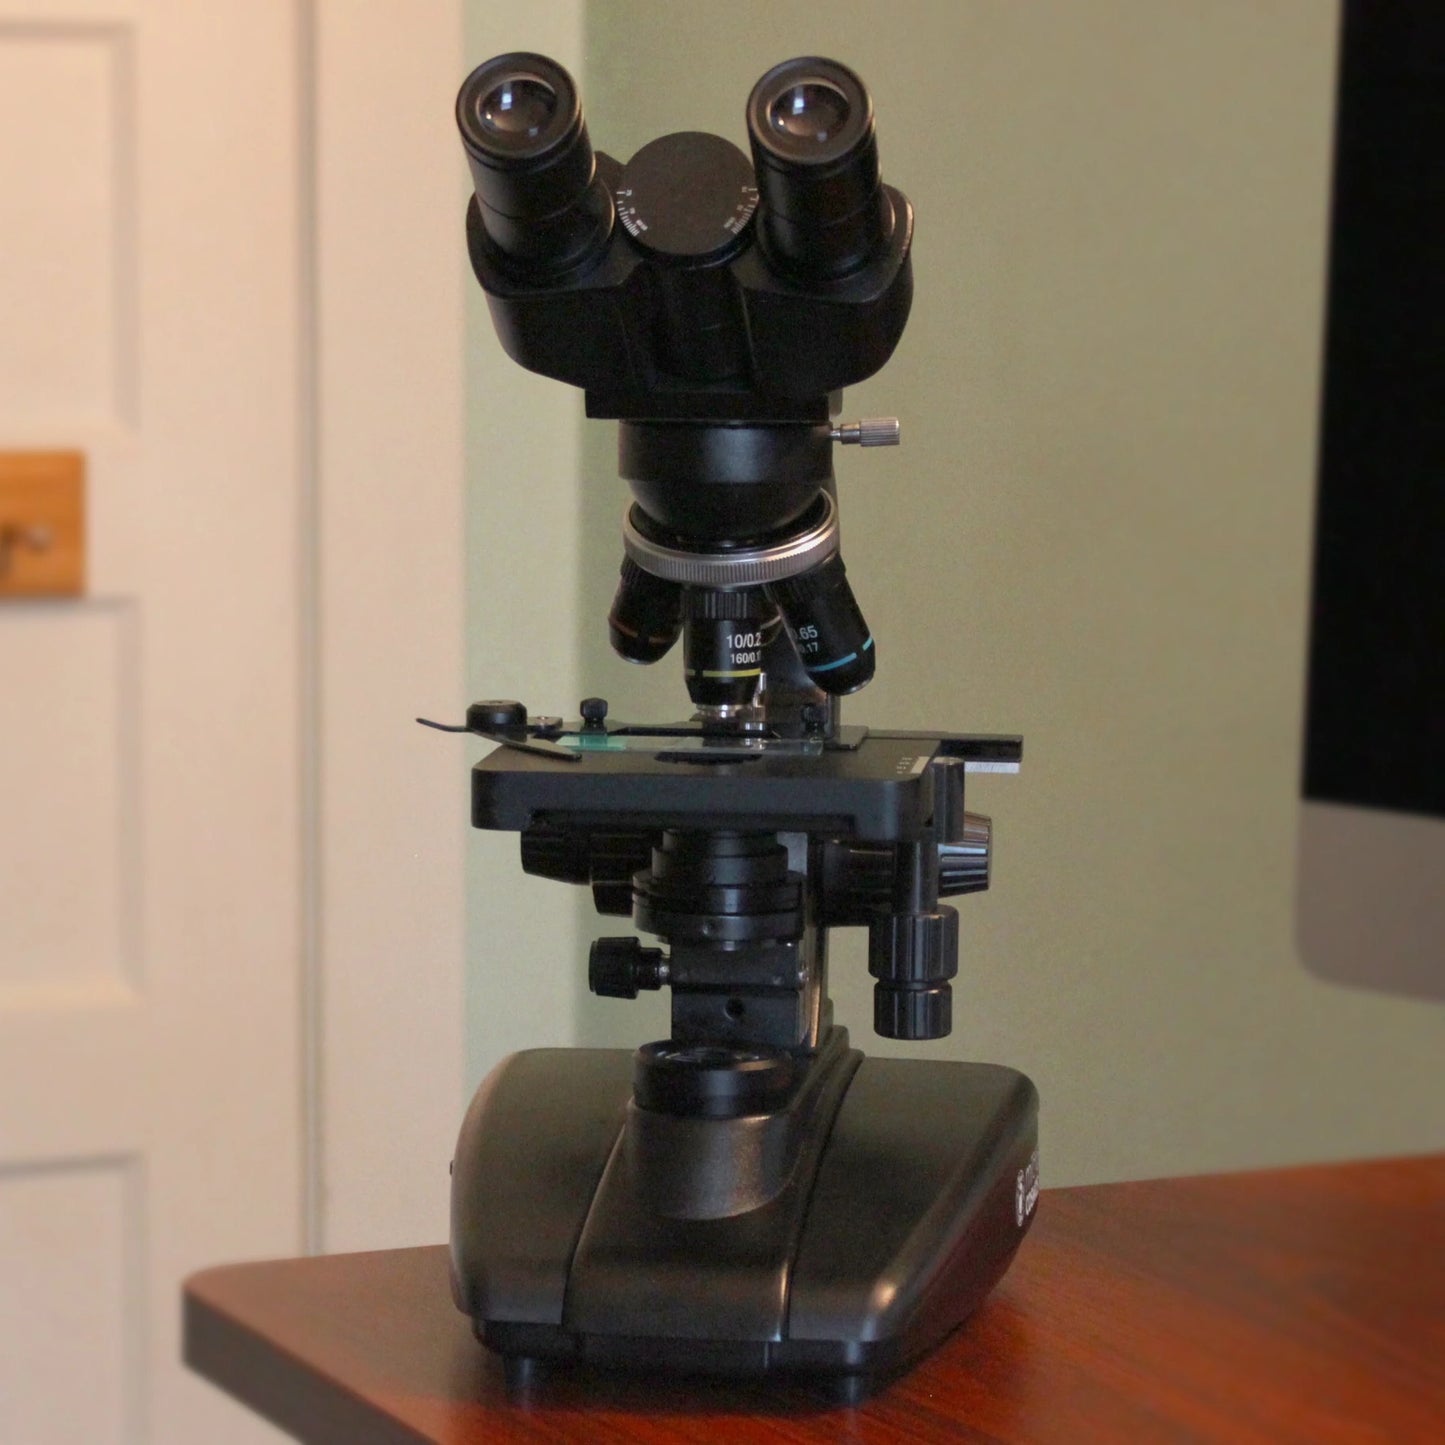 Photograph of a black microscope